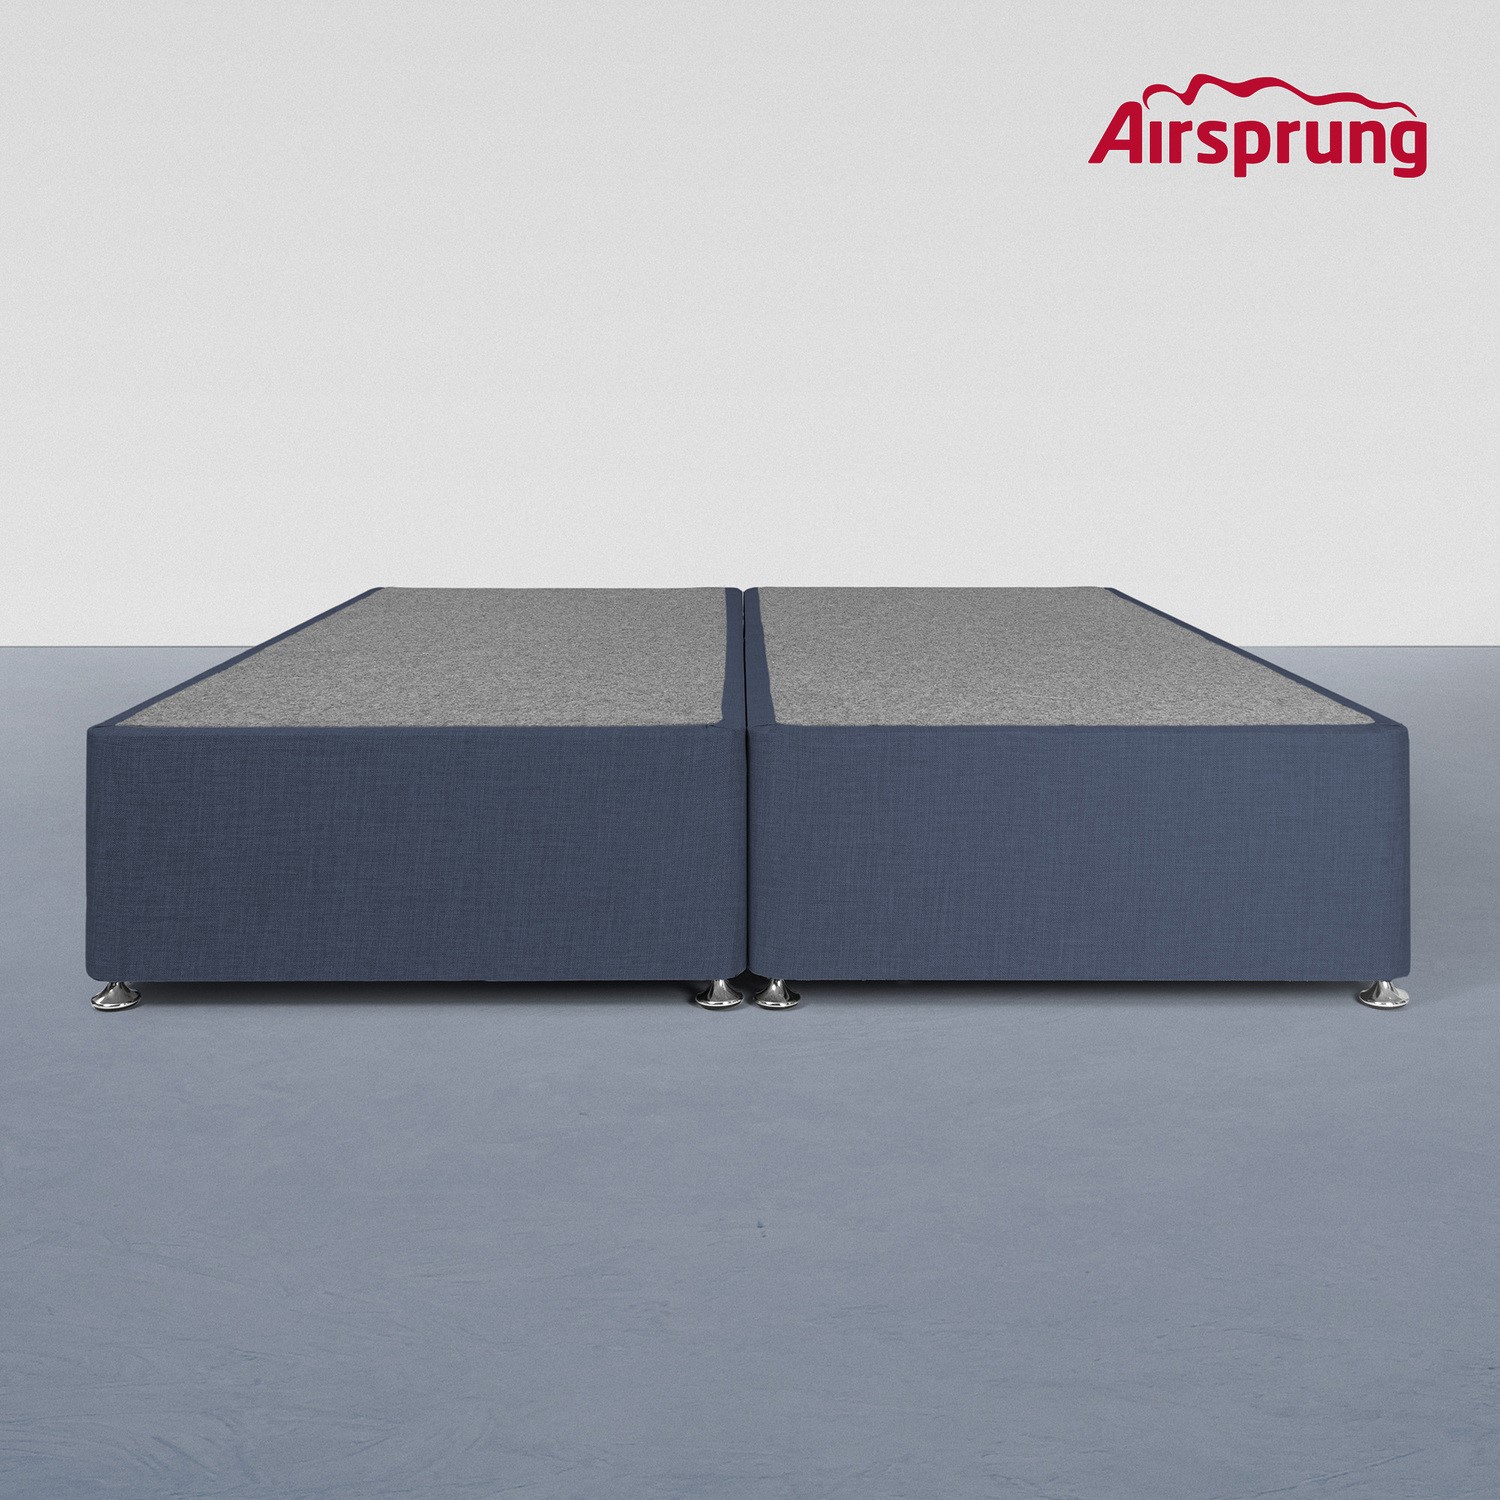 Read more about Airsprung kelston super king 2 drawer divan midnight blue